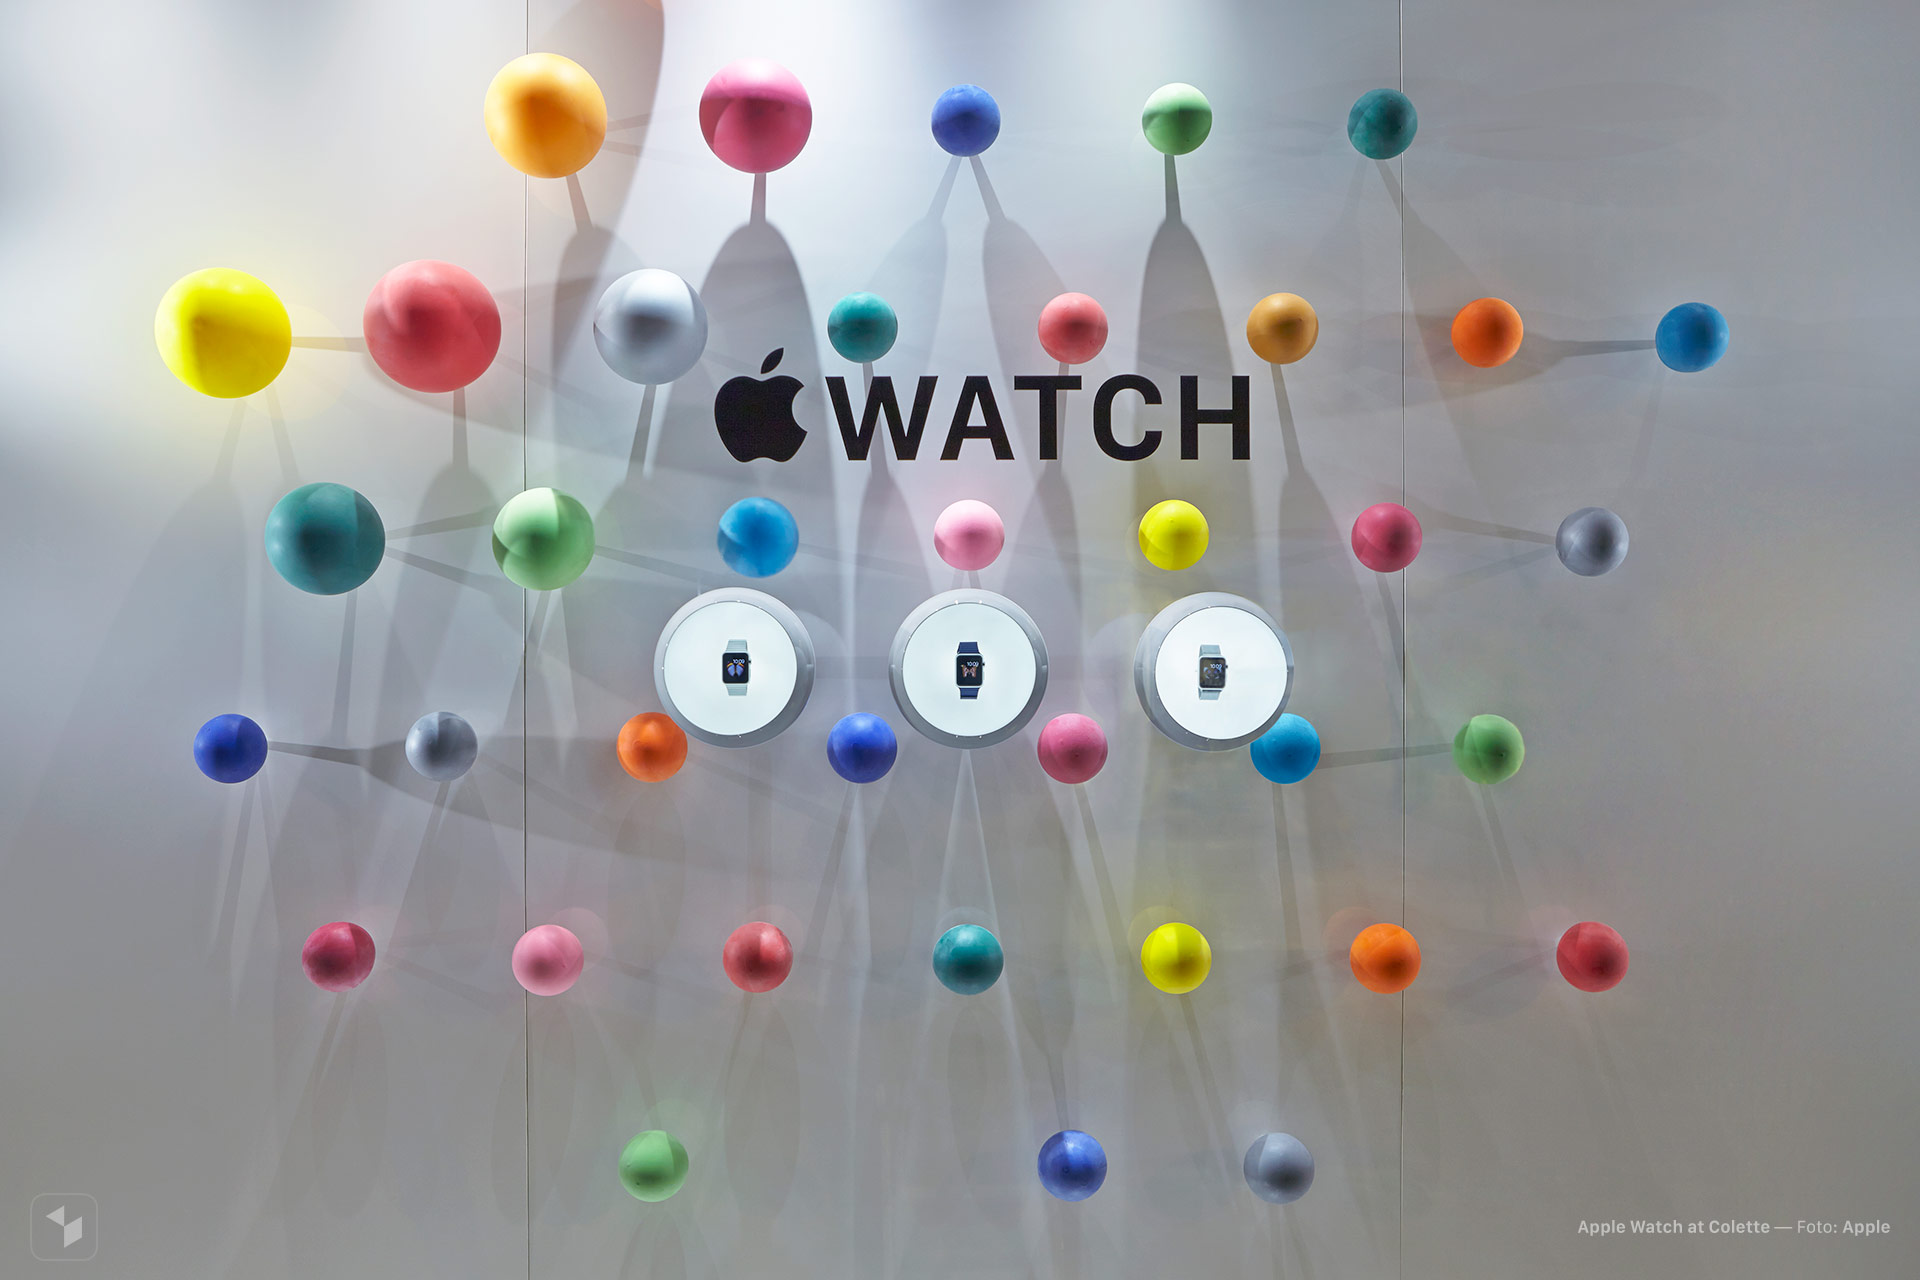 Apple Watch at Colette in Paris